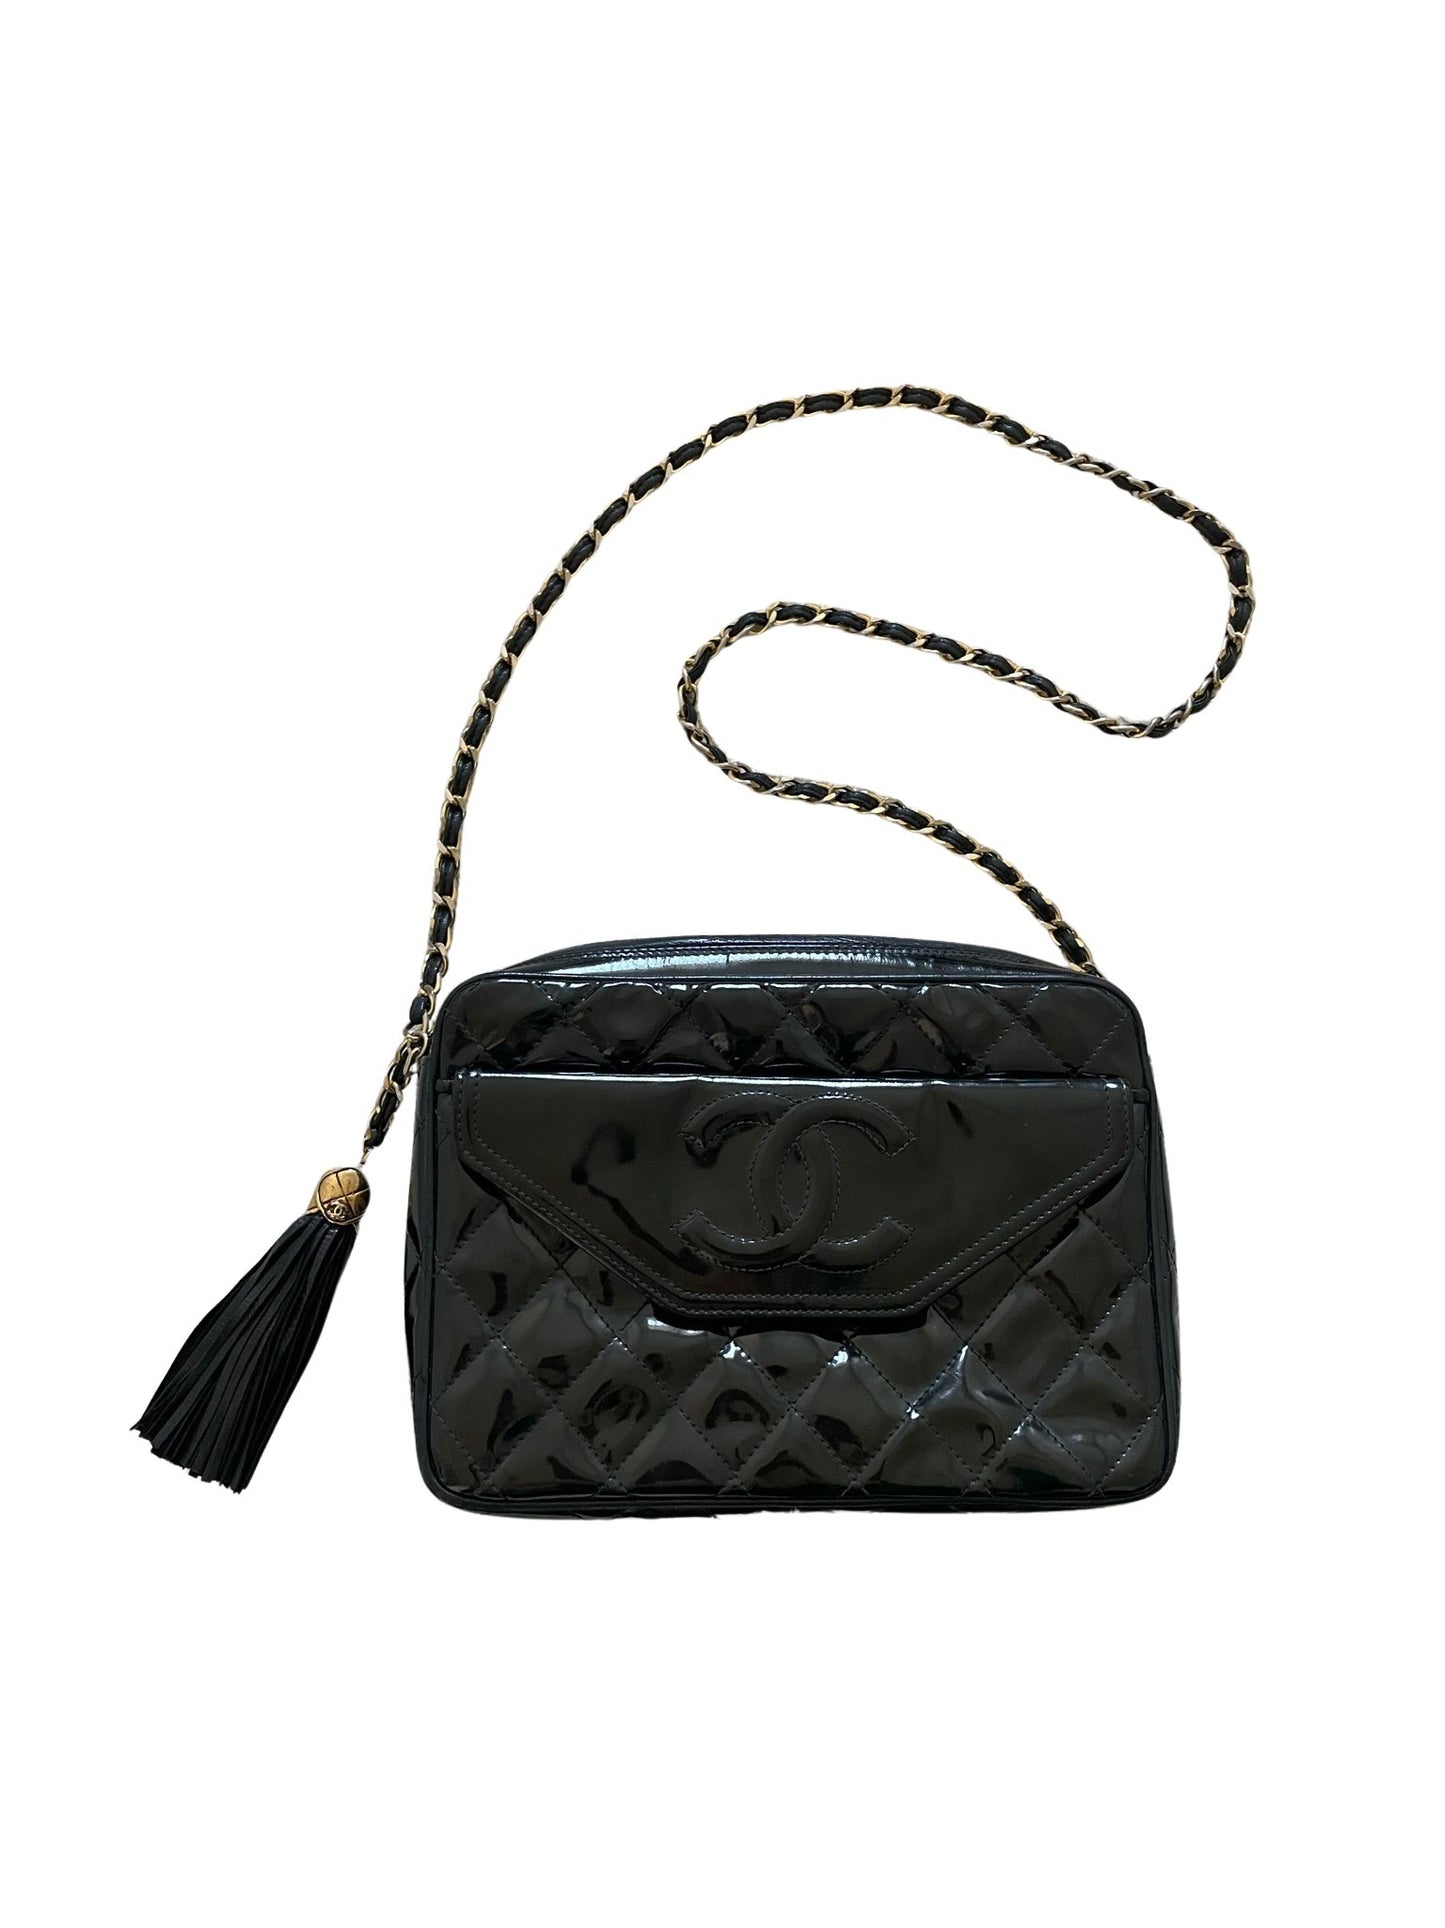 Chanel Matelasse Black Patent Leather Bag